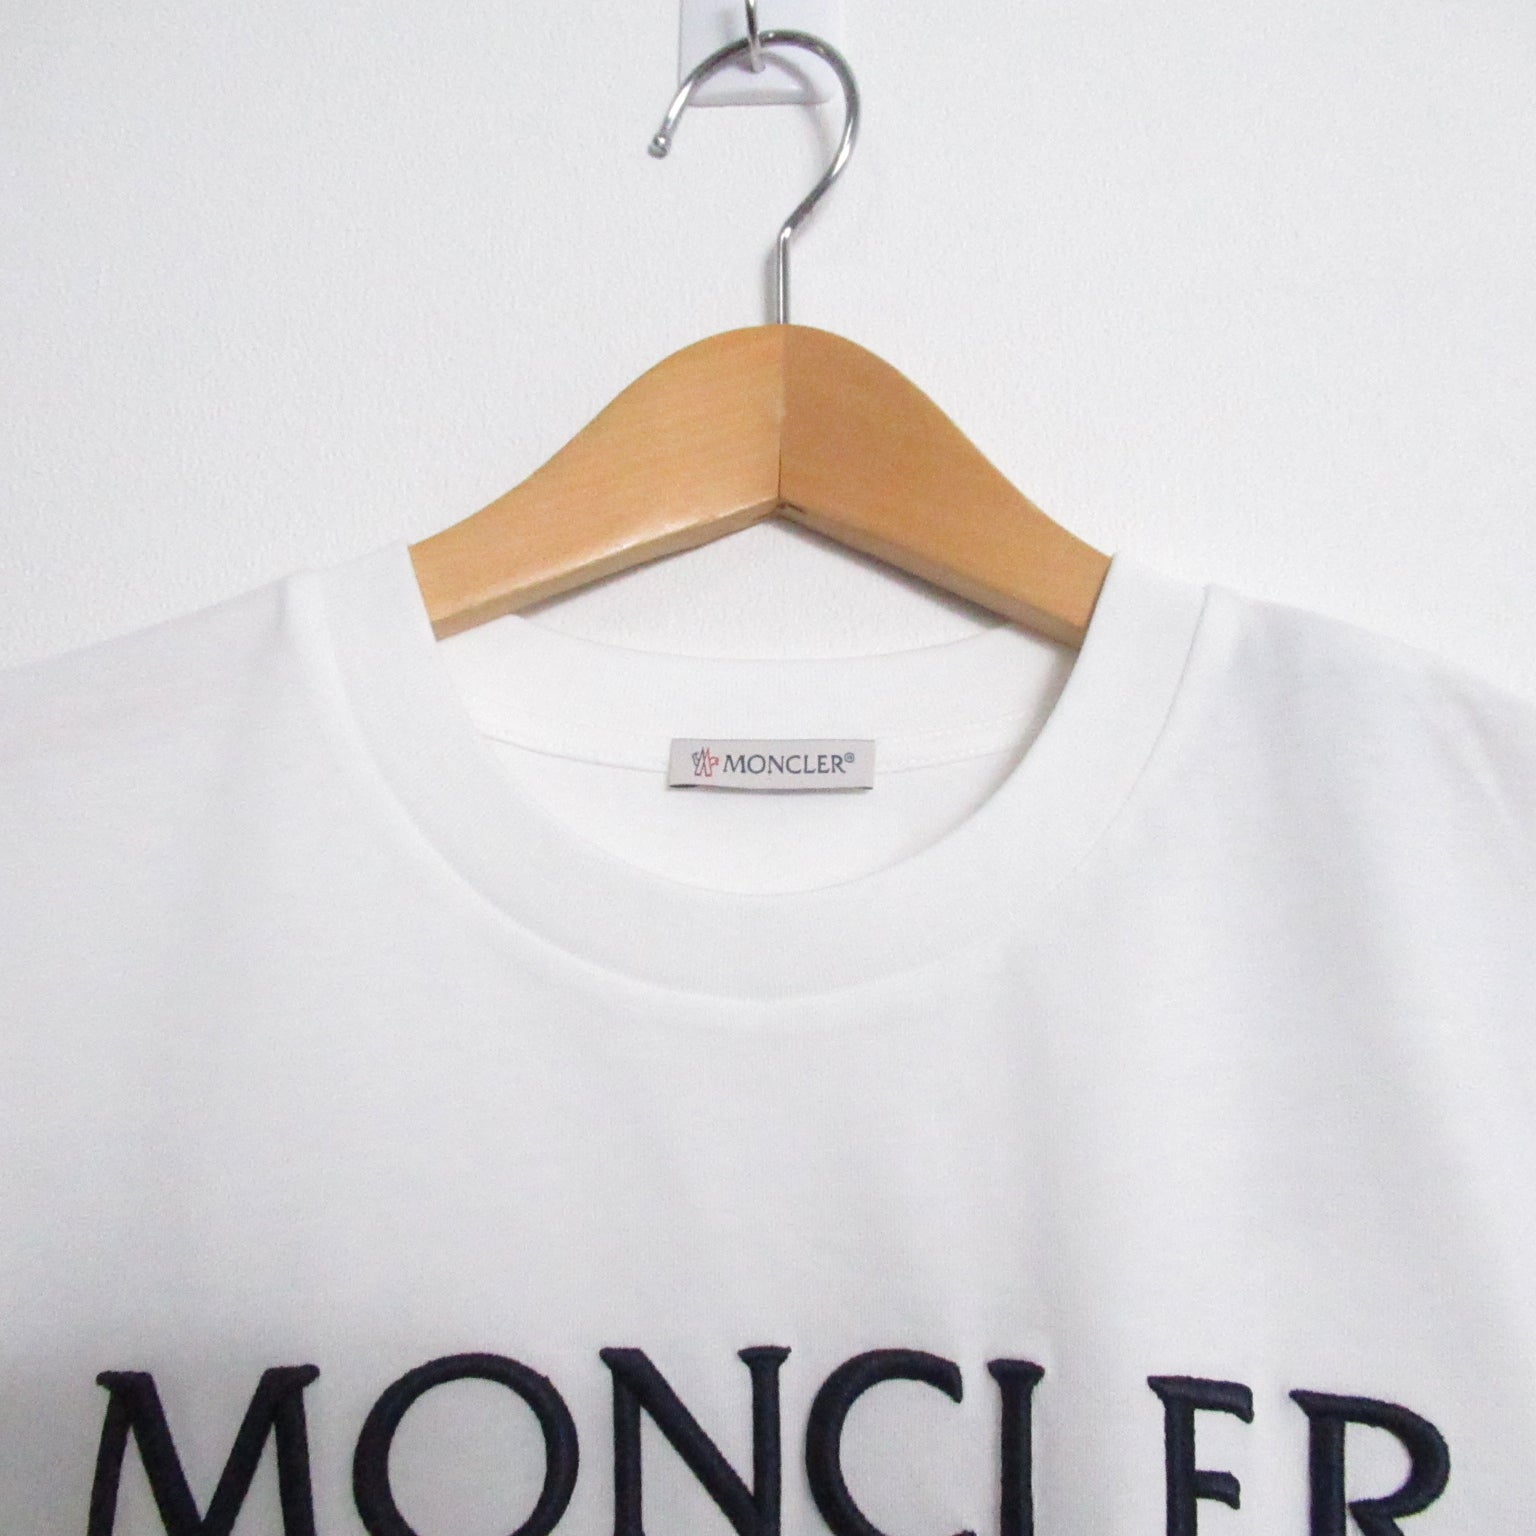 Moncler MONCLER  Half-Hand   Tops Cotton  White 8C00006829HP037M